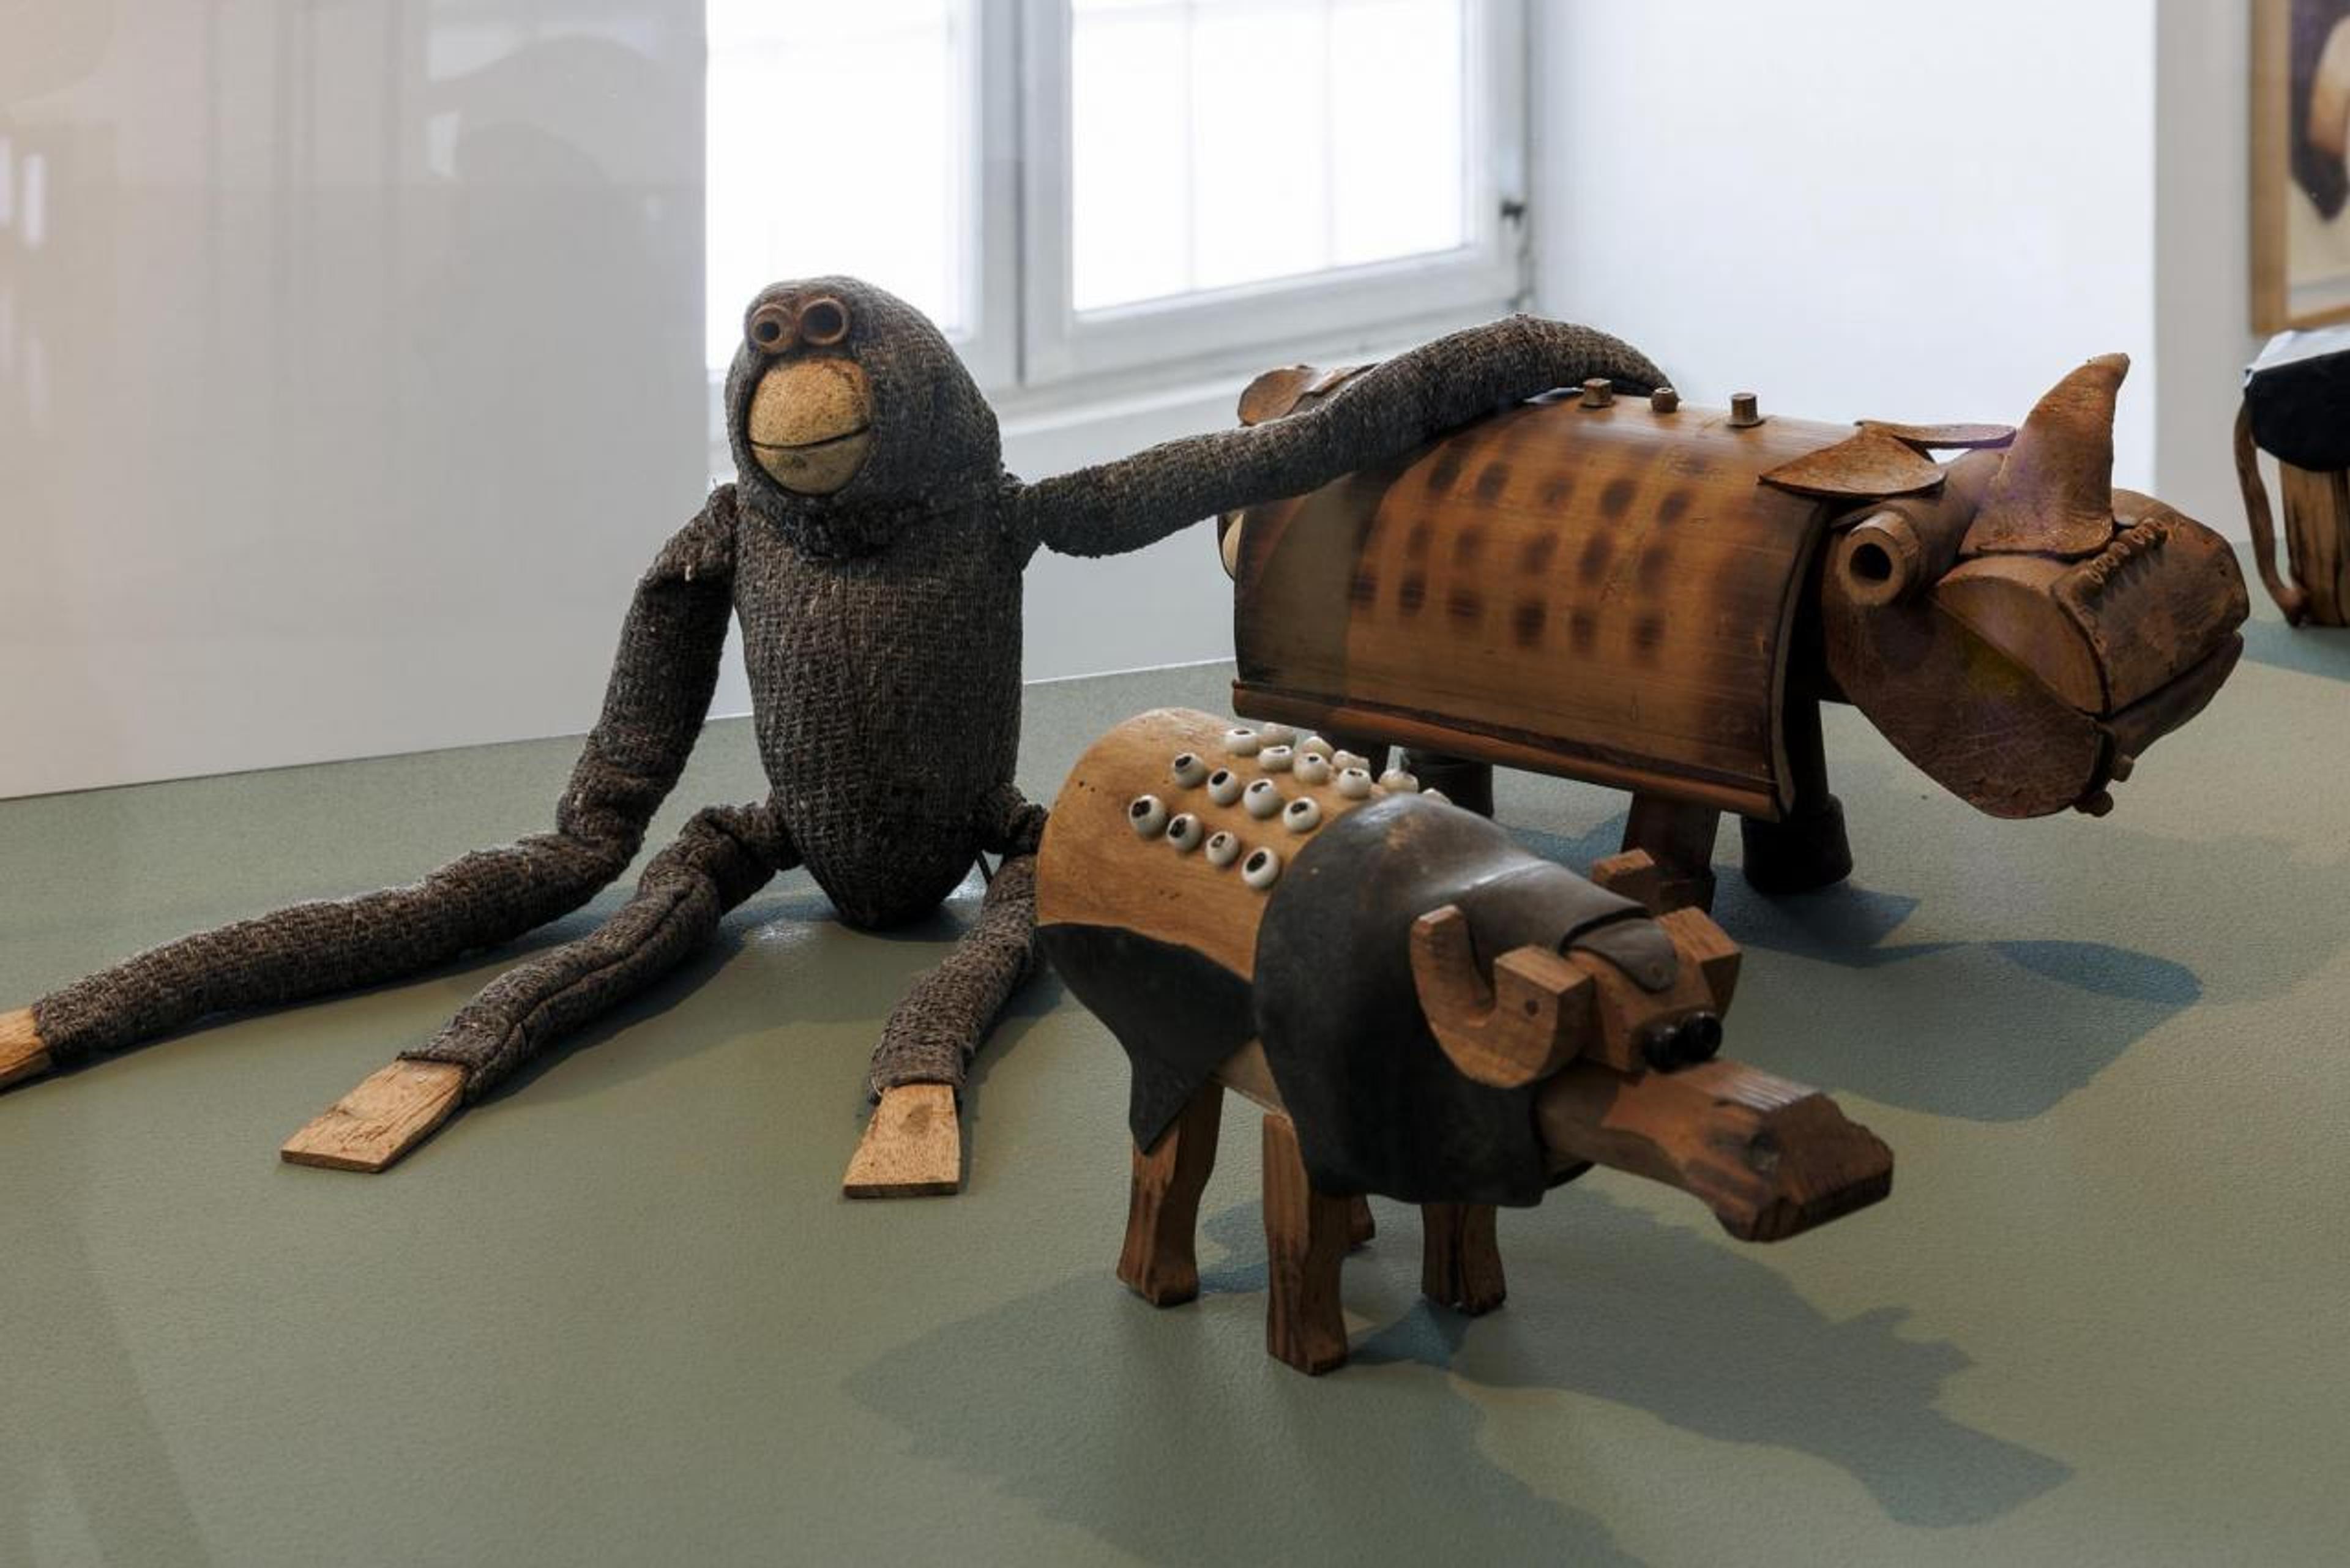 Asia Art Archive and K.G. Subramanyan, Buffalo and Rhino (ca. 1960-1980); Feroze Katpitia, Monkey (ca. 1960-1980); toys designed for the Fine Arts Fair. Installation view, Fridericianum, 2022, Kassel. Photo: Frank Sperling